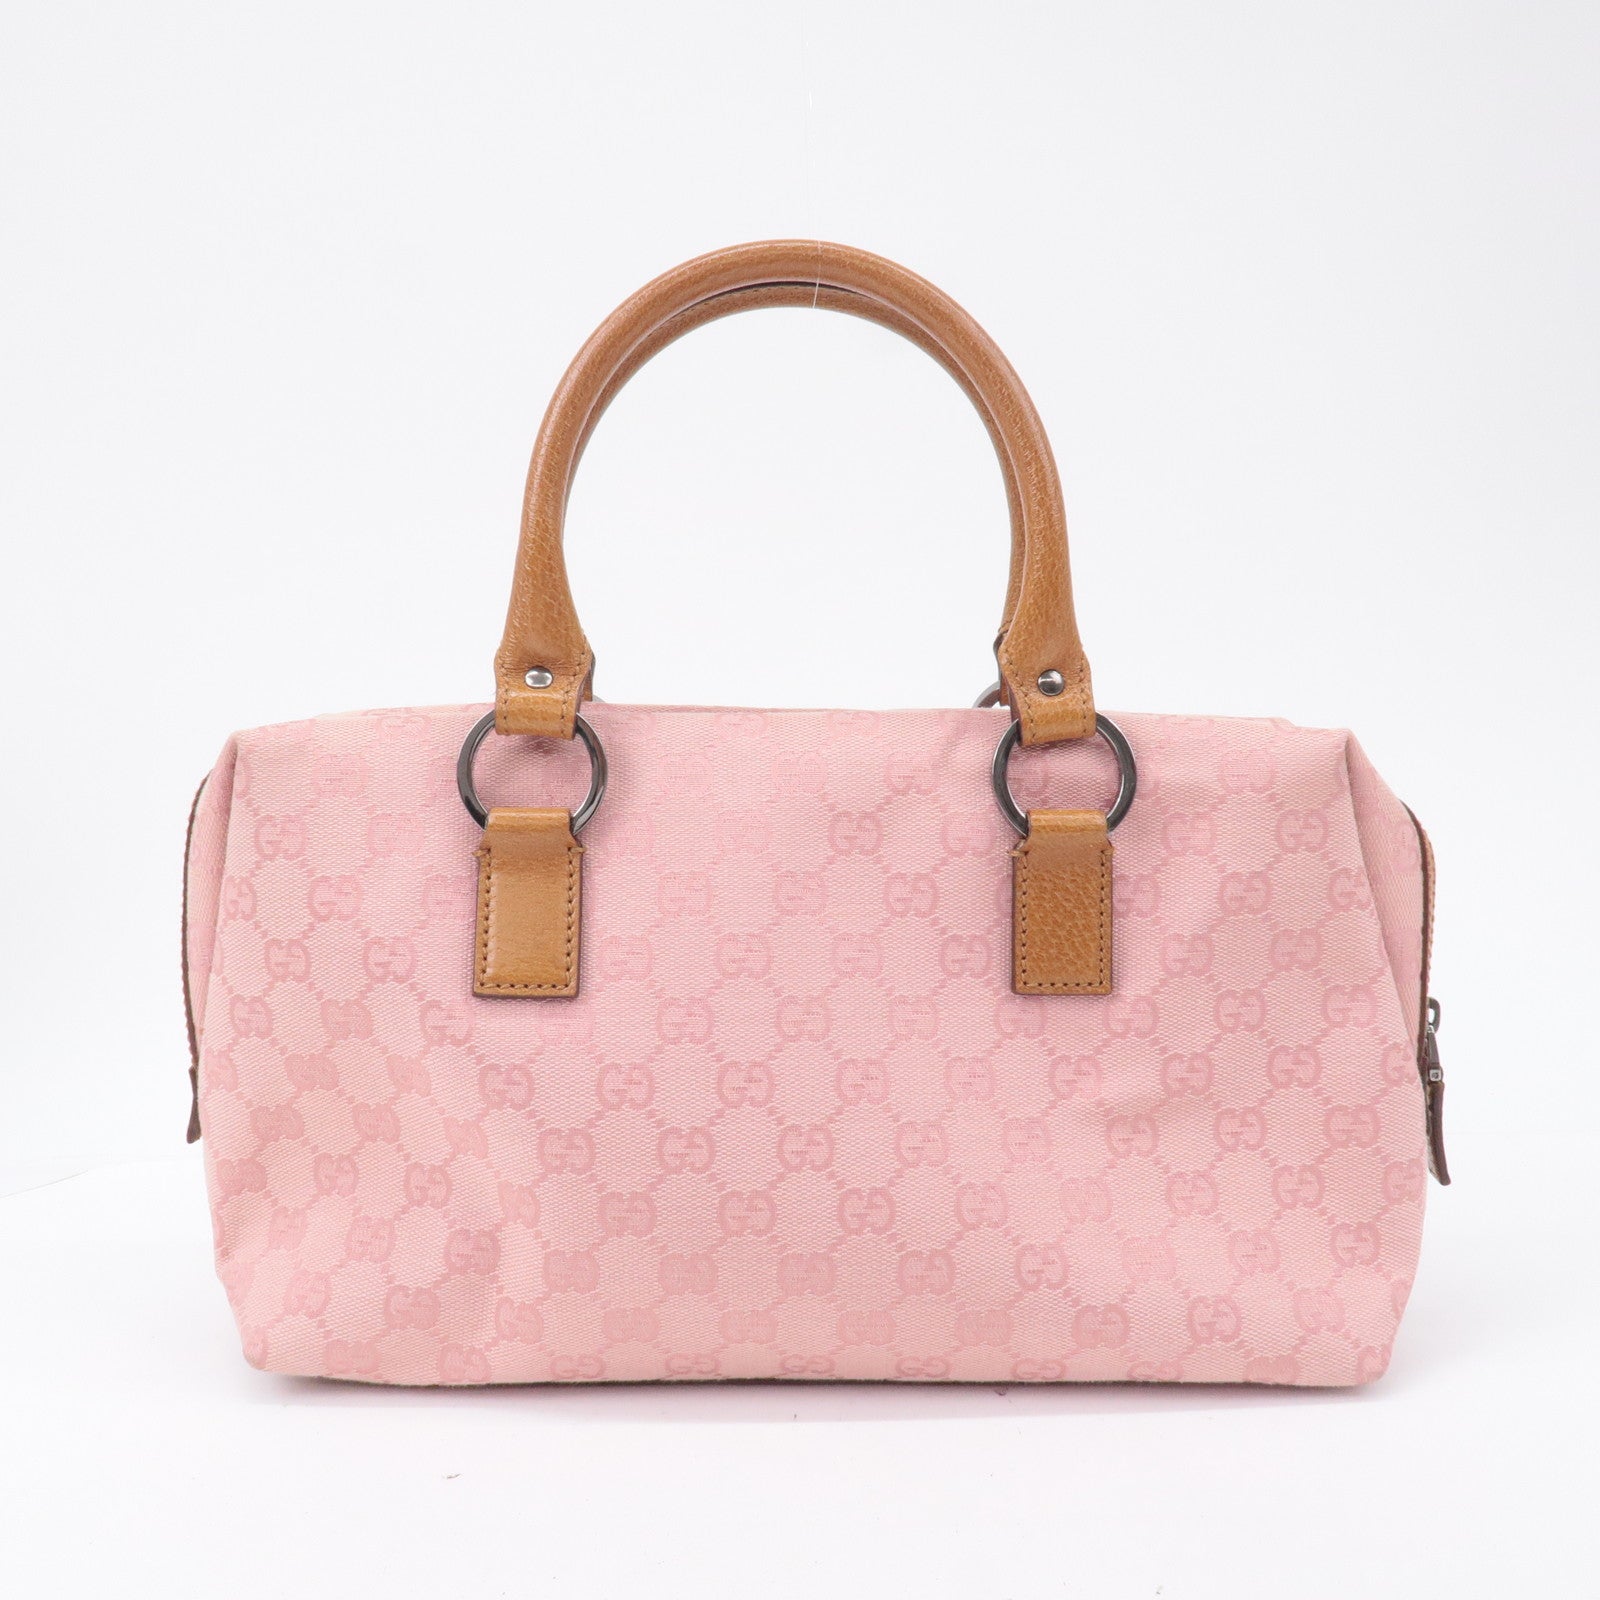 Used] Gucci bag GUCCI leather canvas GG mini Boston bag handbag